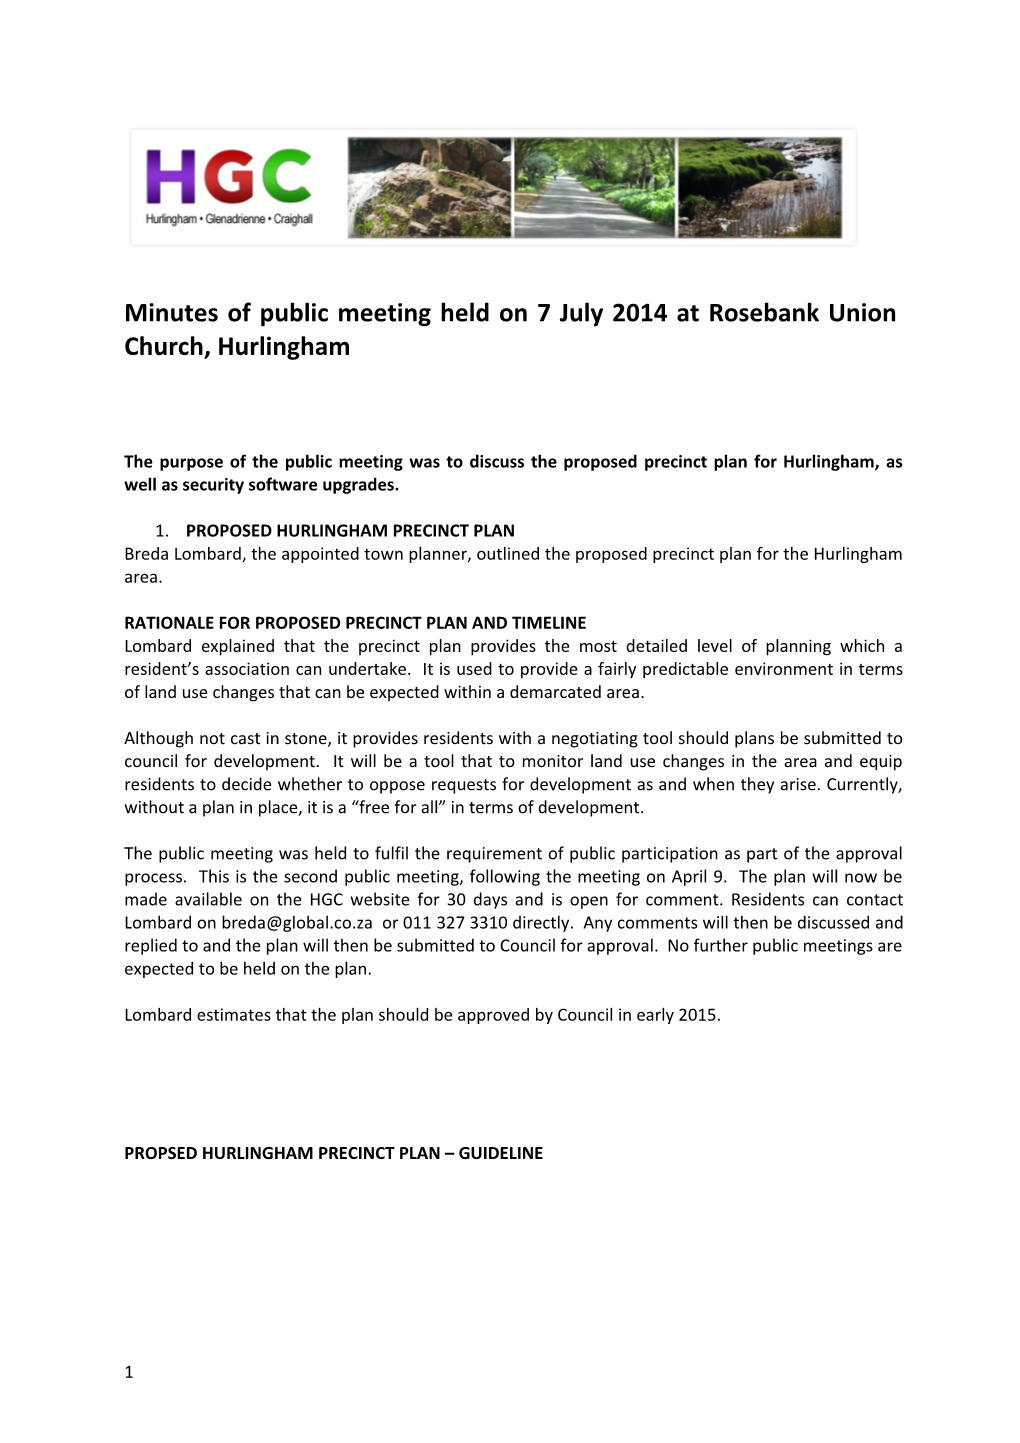 Minutes of Public Meeting Held on 7 July 2014 at Rosebank Union Church, Hurlingham